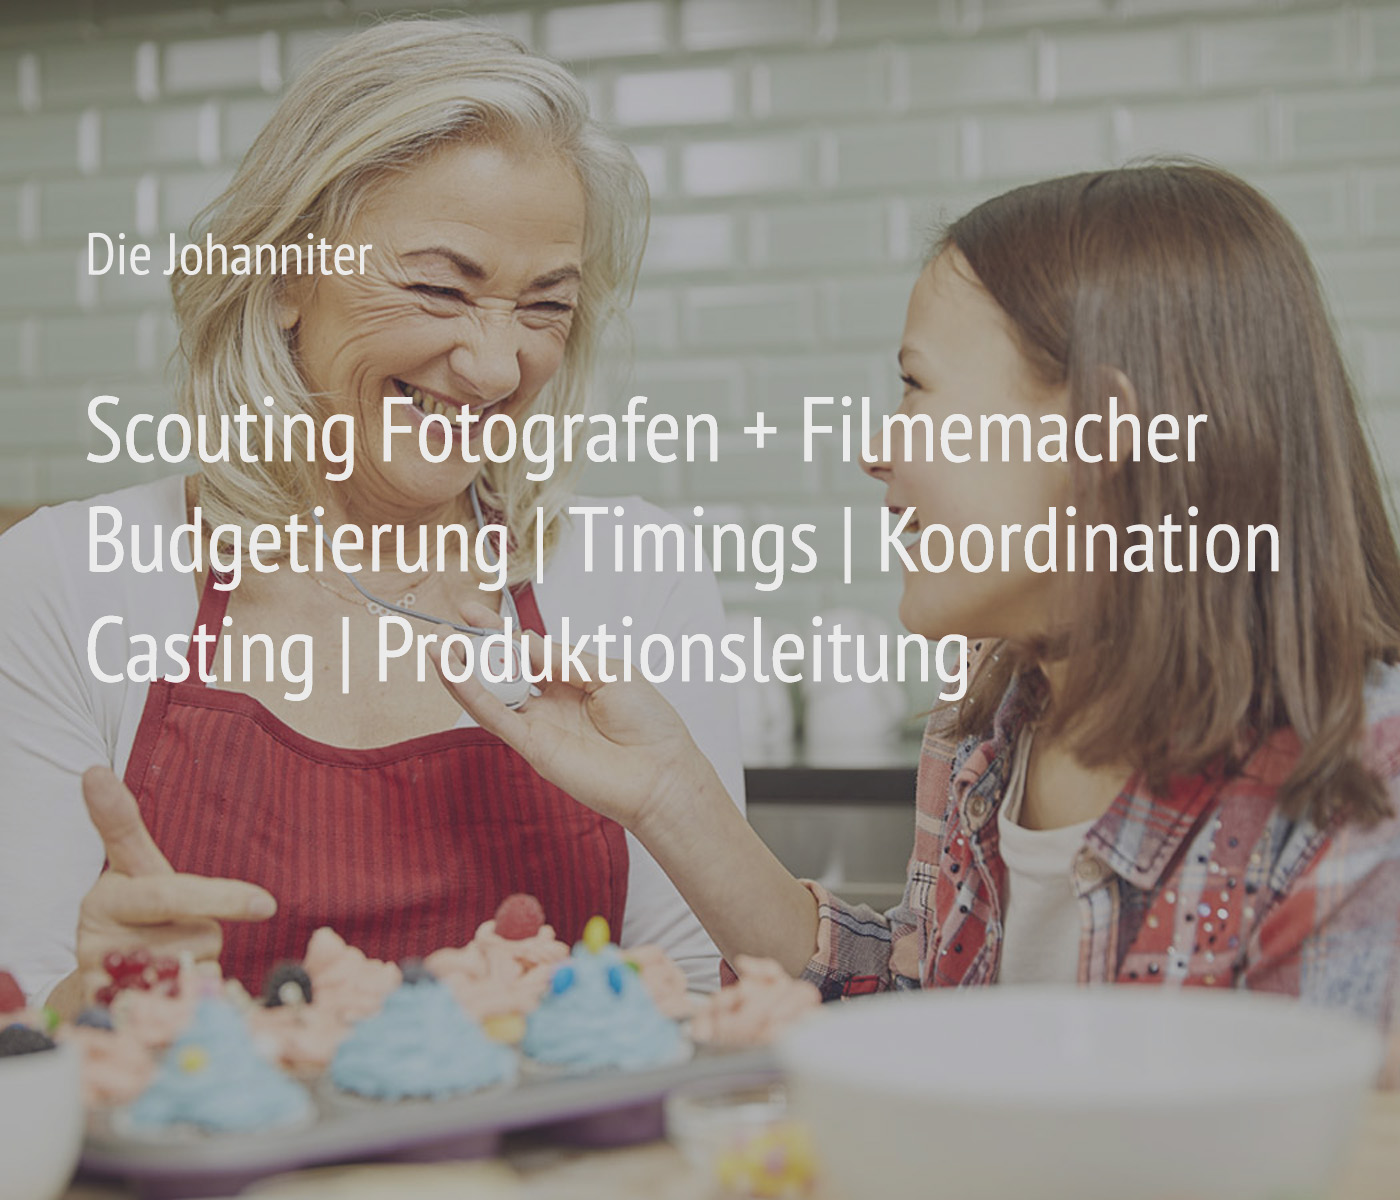 EXPOSE Conny Oelker | Projekt | Die Johanniter | Scouting Fotografen + Filmemacher | Budgetierung | Timings | Koordination | Casting | Produktionsleitung